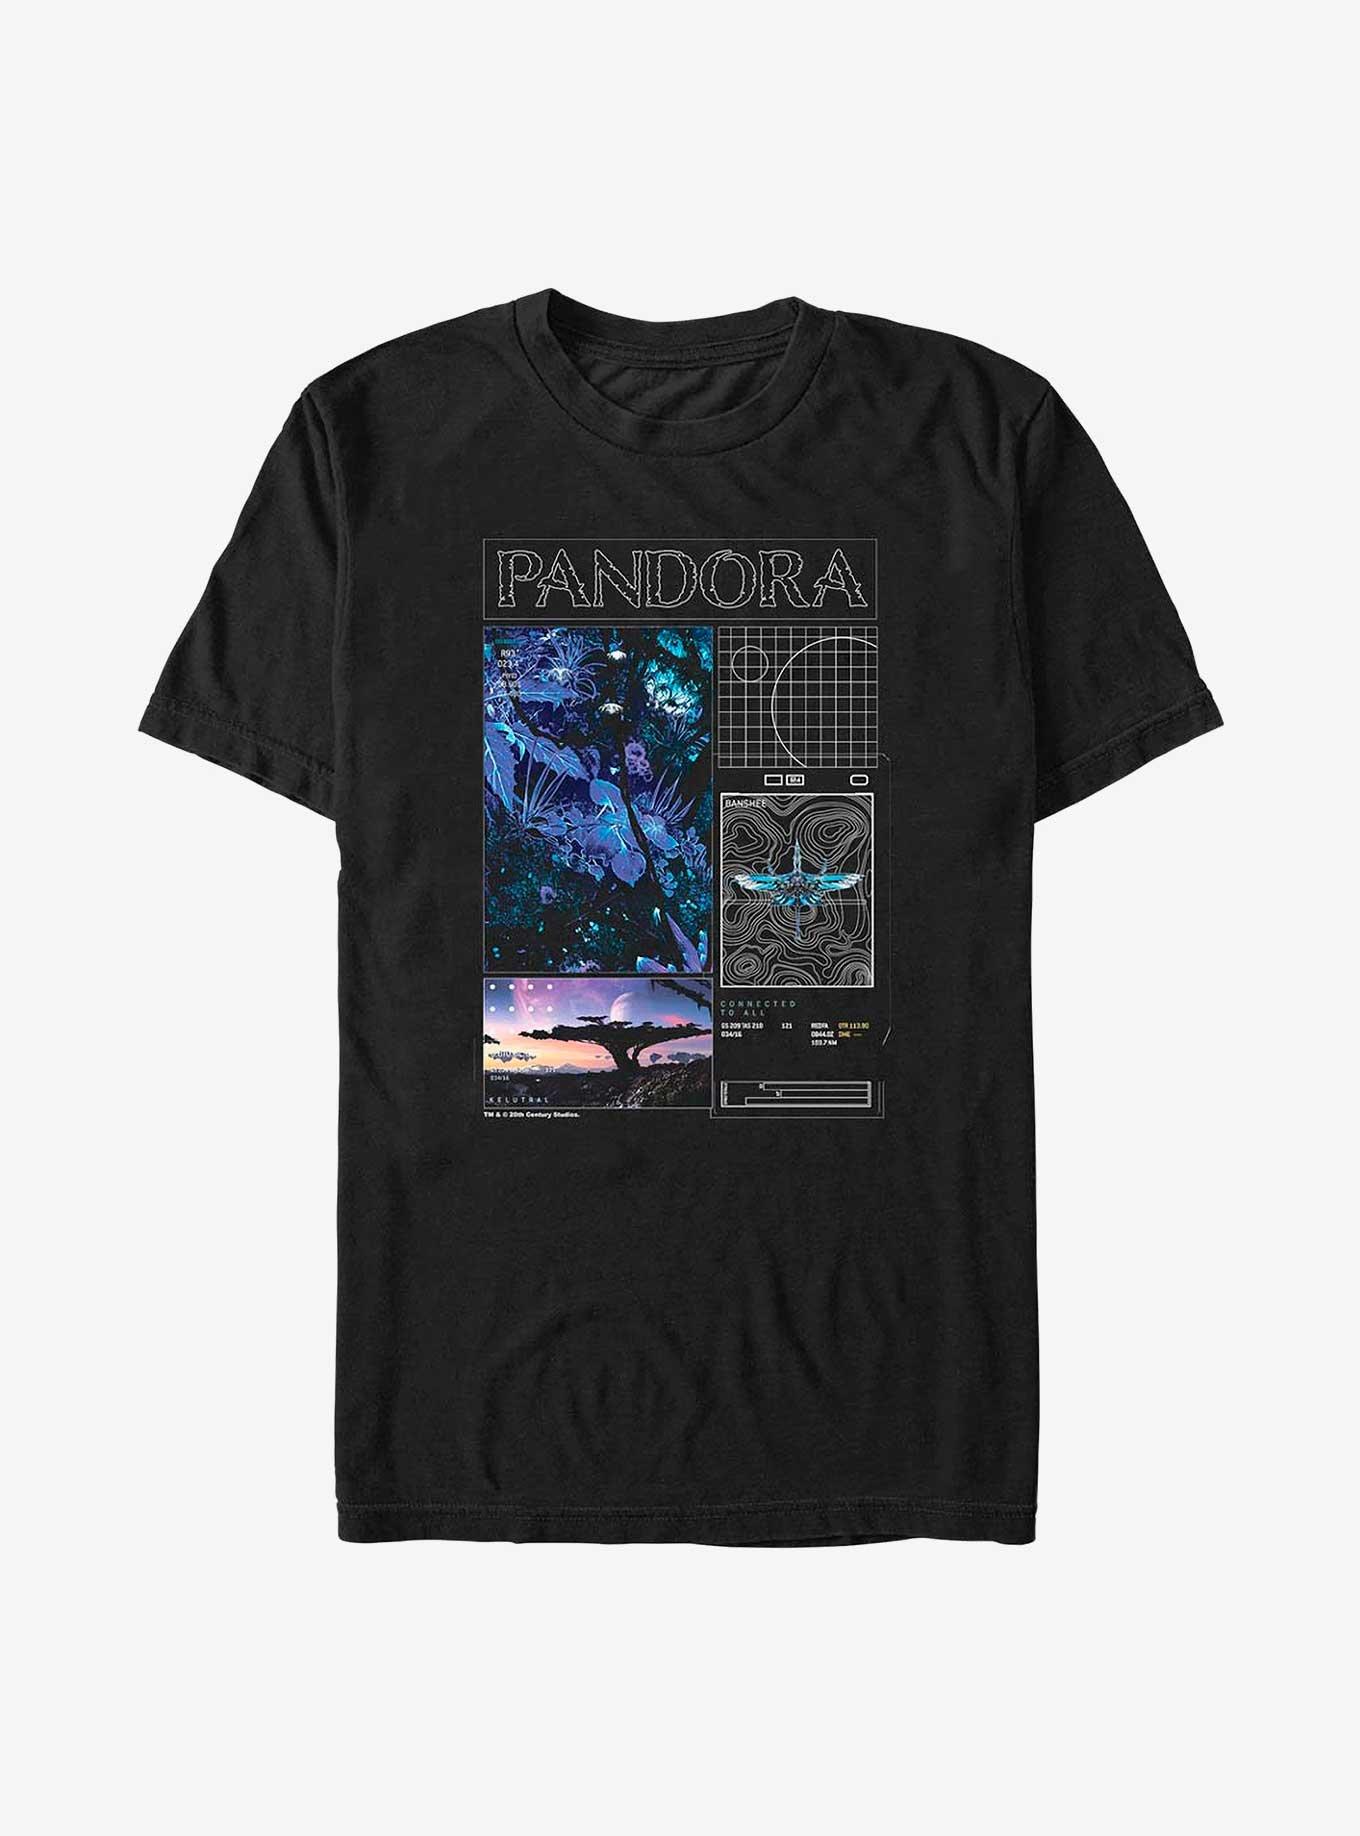 Avatar Pandora Schematic T-Shirt, BLACK, hi-res